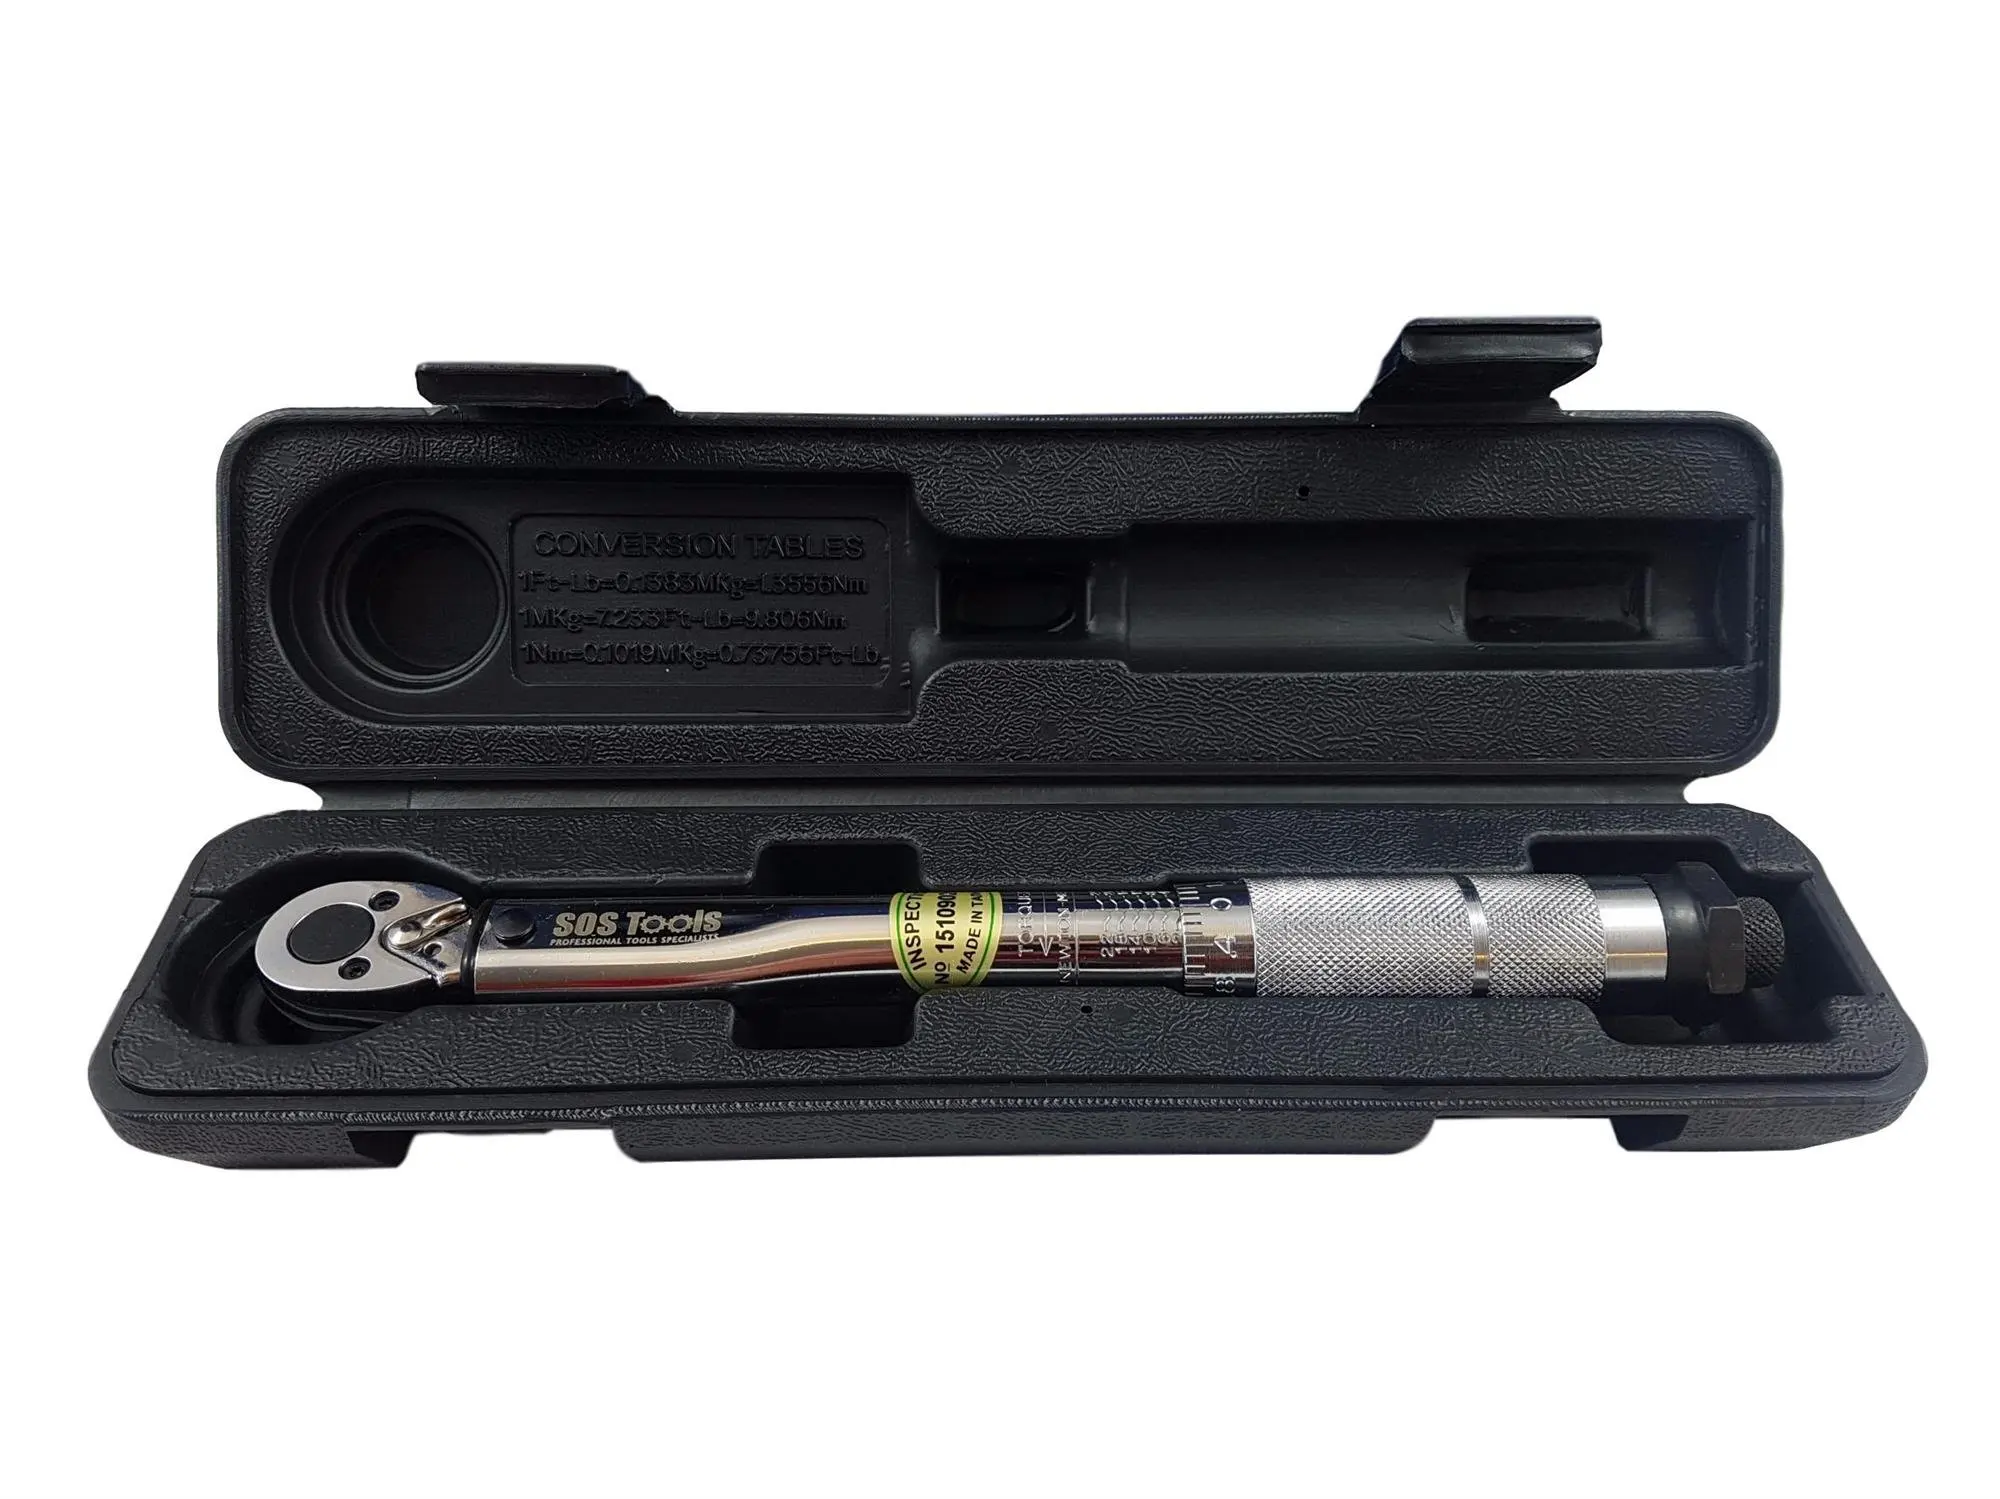 Calibration tool. Proxxon Torque Wrench 1/4” Square Drive. Ключ динамометрический 6-30 НМ. Ключ динамометрический Tongli. Micrometer Automatic Torque Wrench.